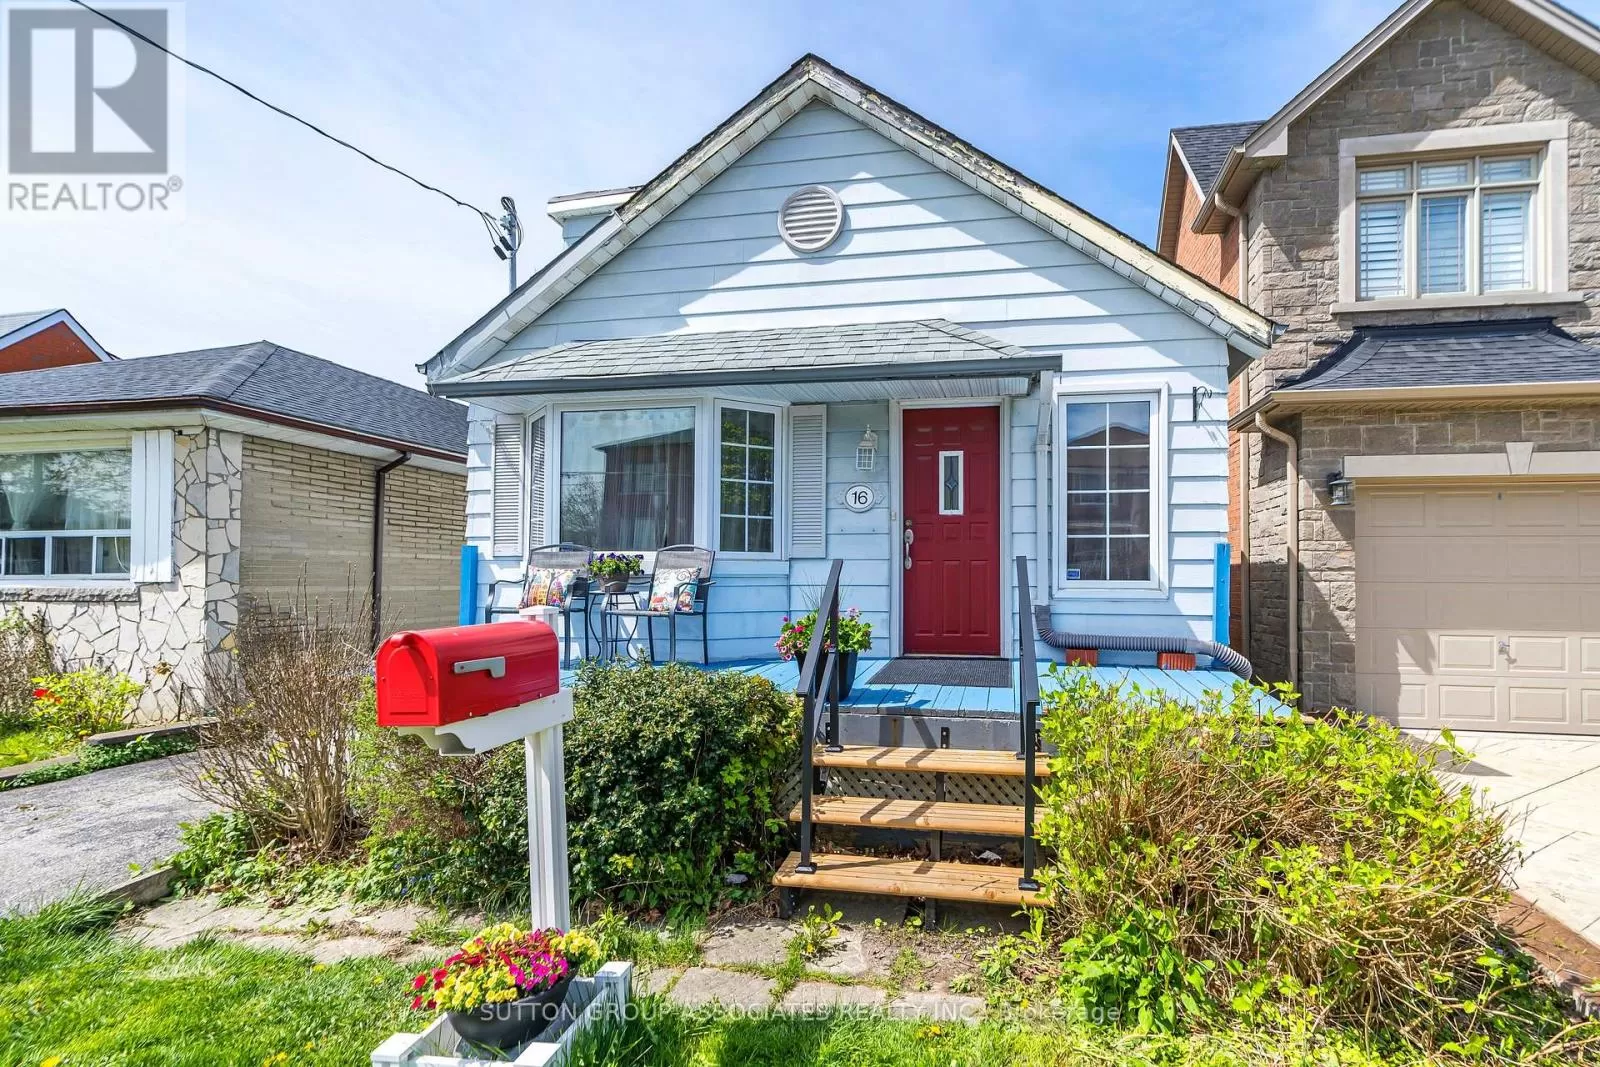 House for rent: 16 North Bonnington Avenue, Toronto, Ontario M1K 1X2